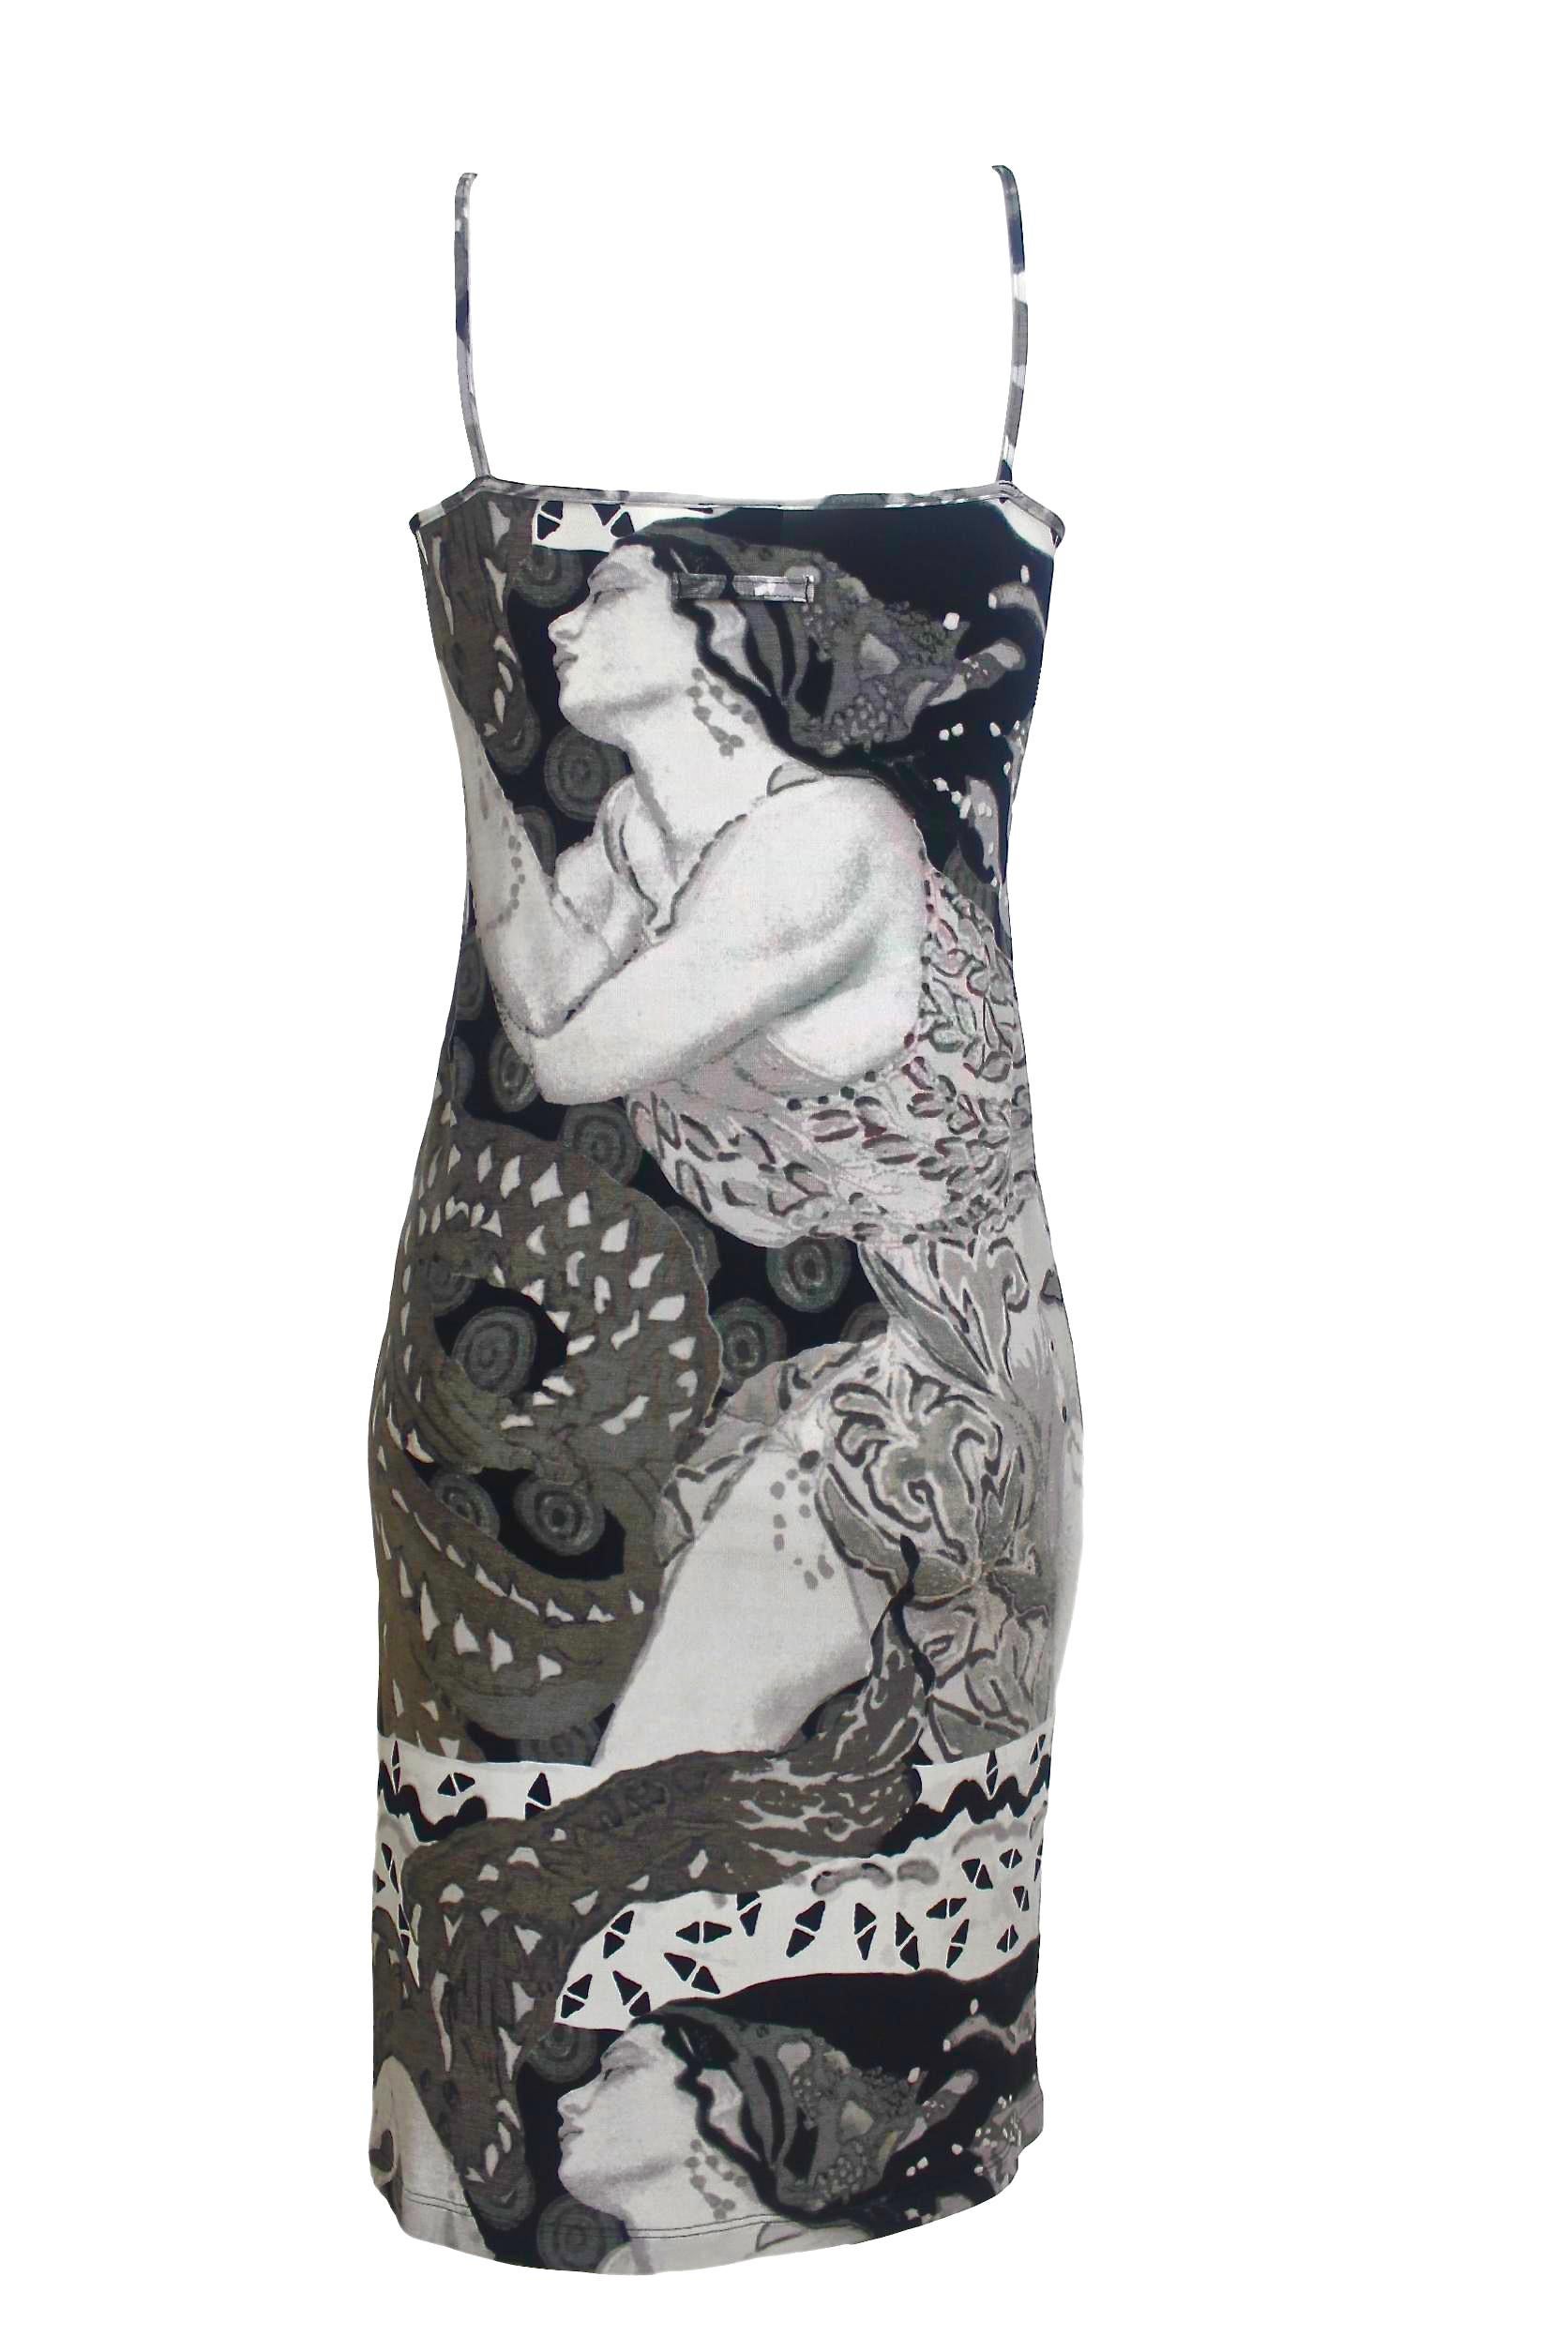 Jean paul Gaultier 'Erte' Print Summer Slip Dress For Sale 3